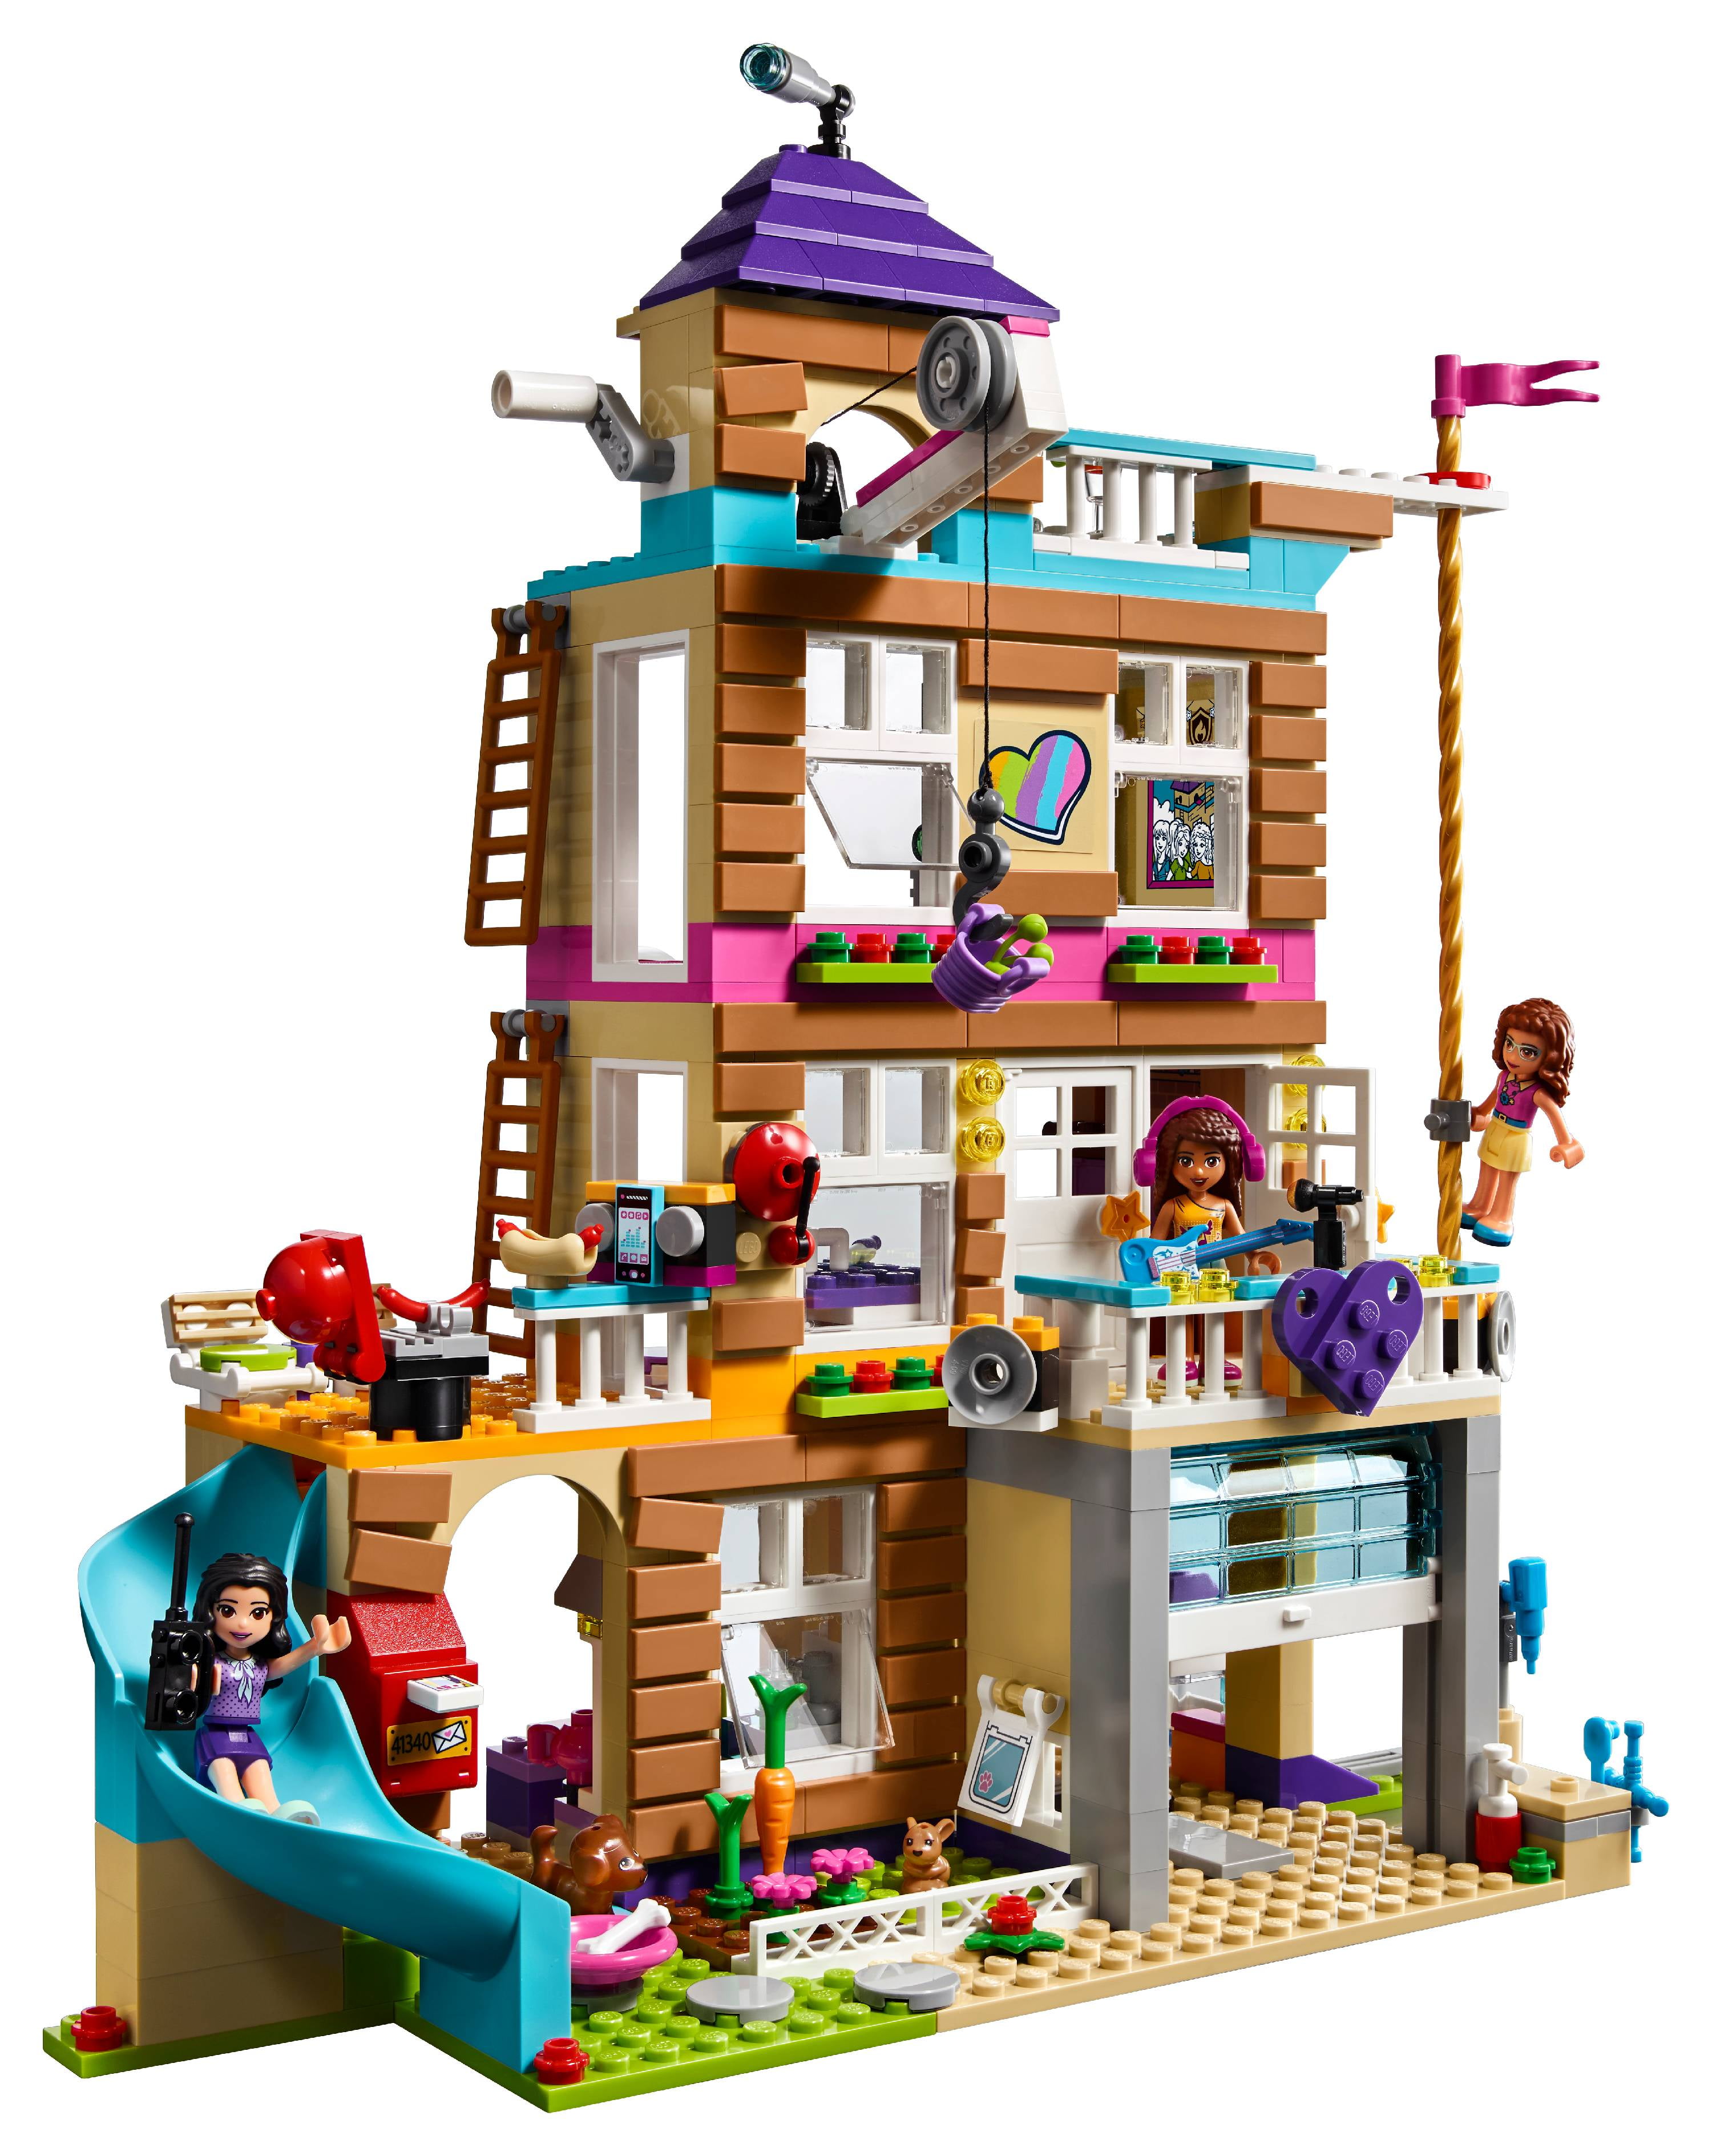 Lego Friends House Of Friendship - benim.k12.tr 1688274166